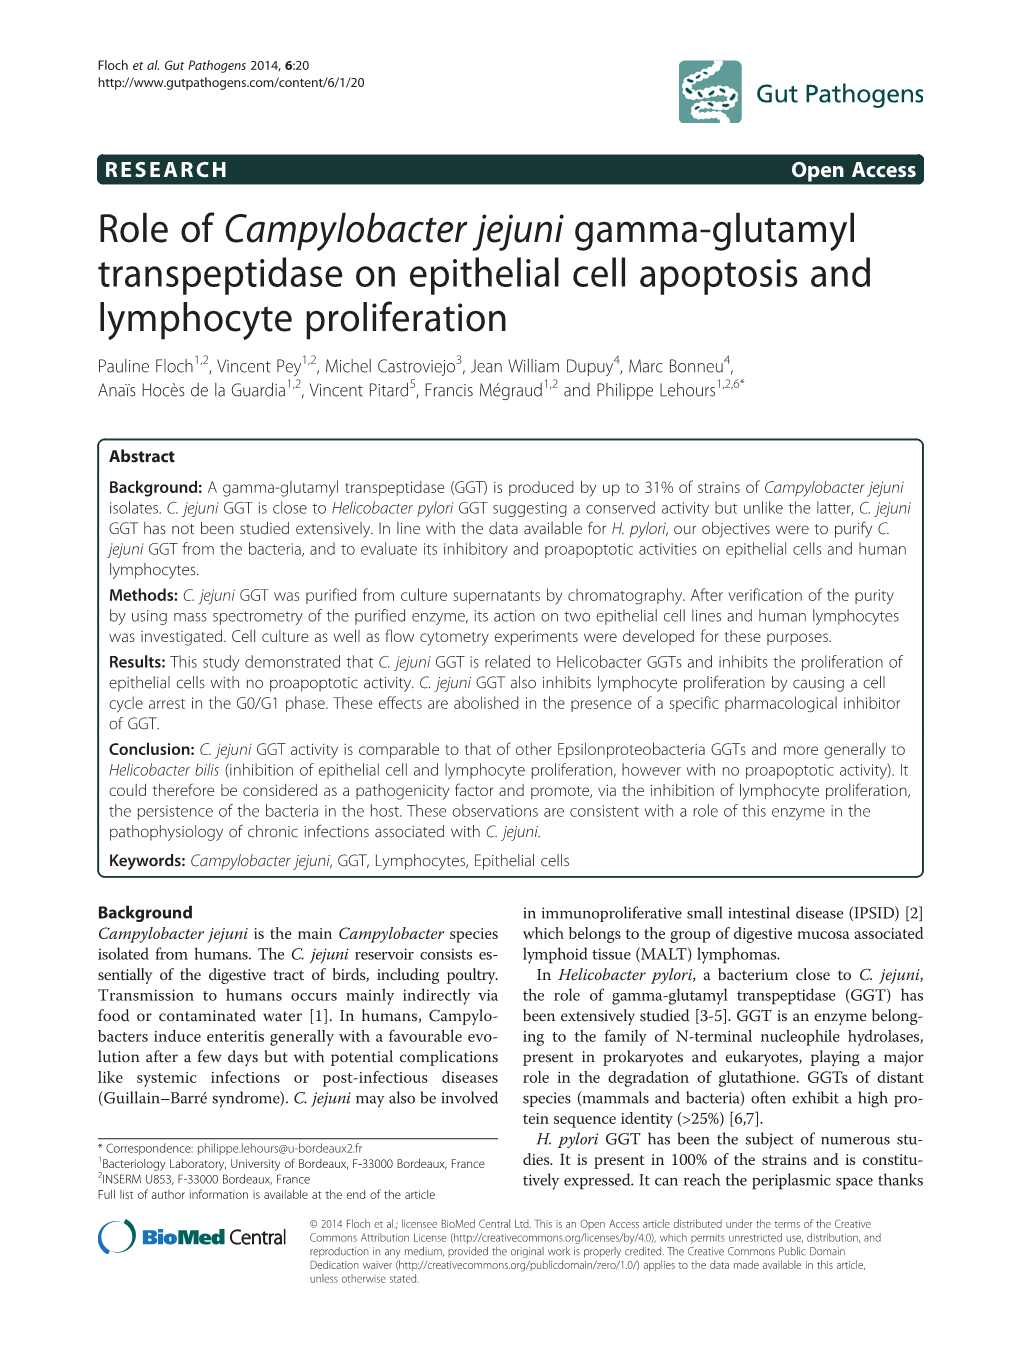 Role of Campylobacter Jejuni Gamma-Glutamyl Transpeptidase On